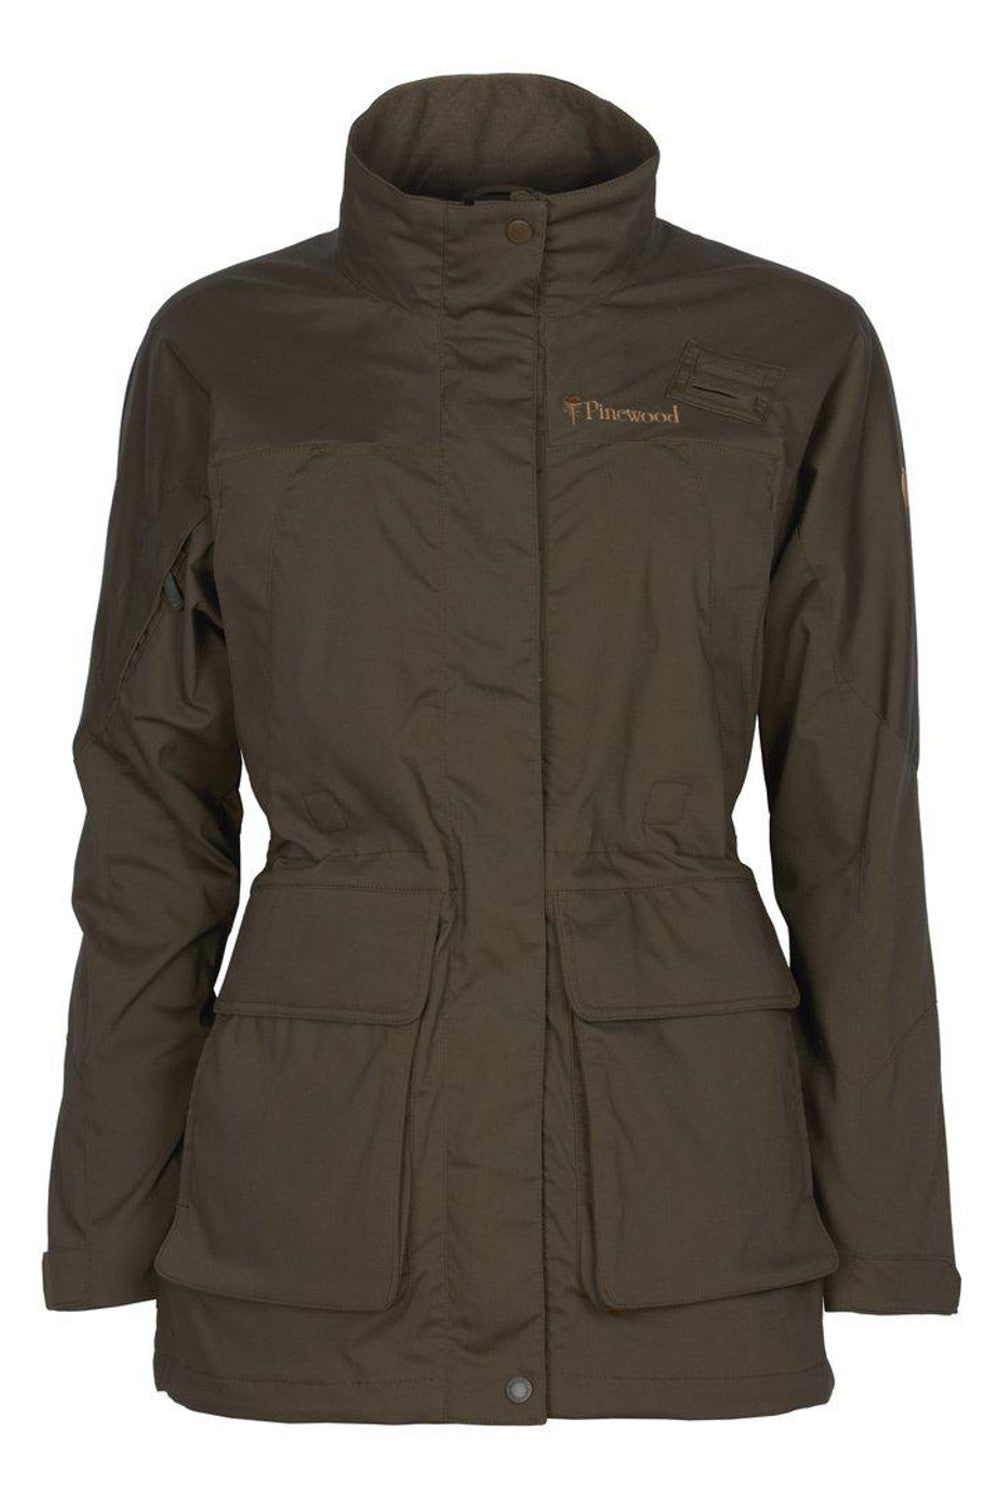 Pinewood Womens Wildmark Extreme Jacket In Dark Olive 